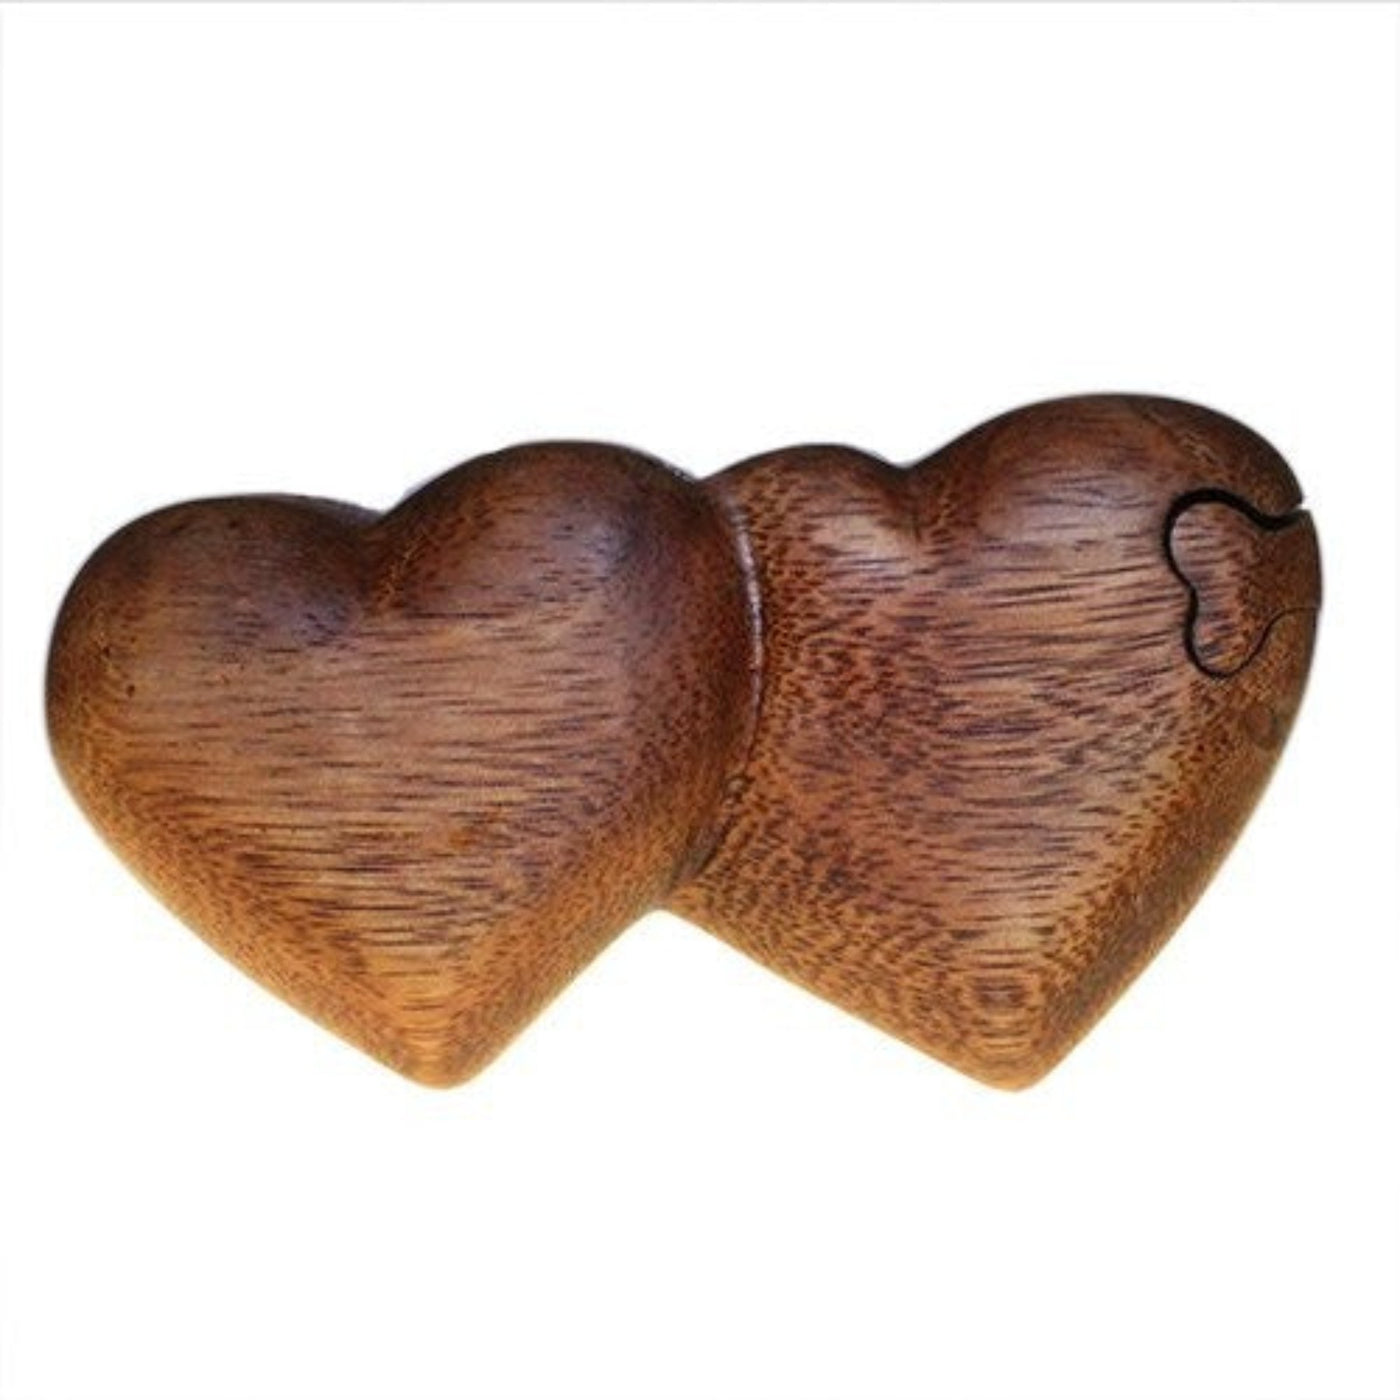 Handmade Love Hearts Shaped Wooden Magic Puzzle Storage Box.